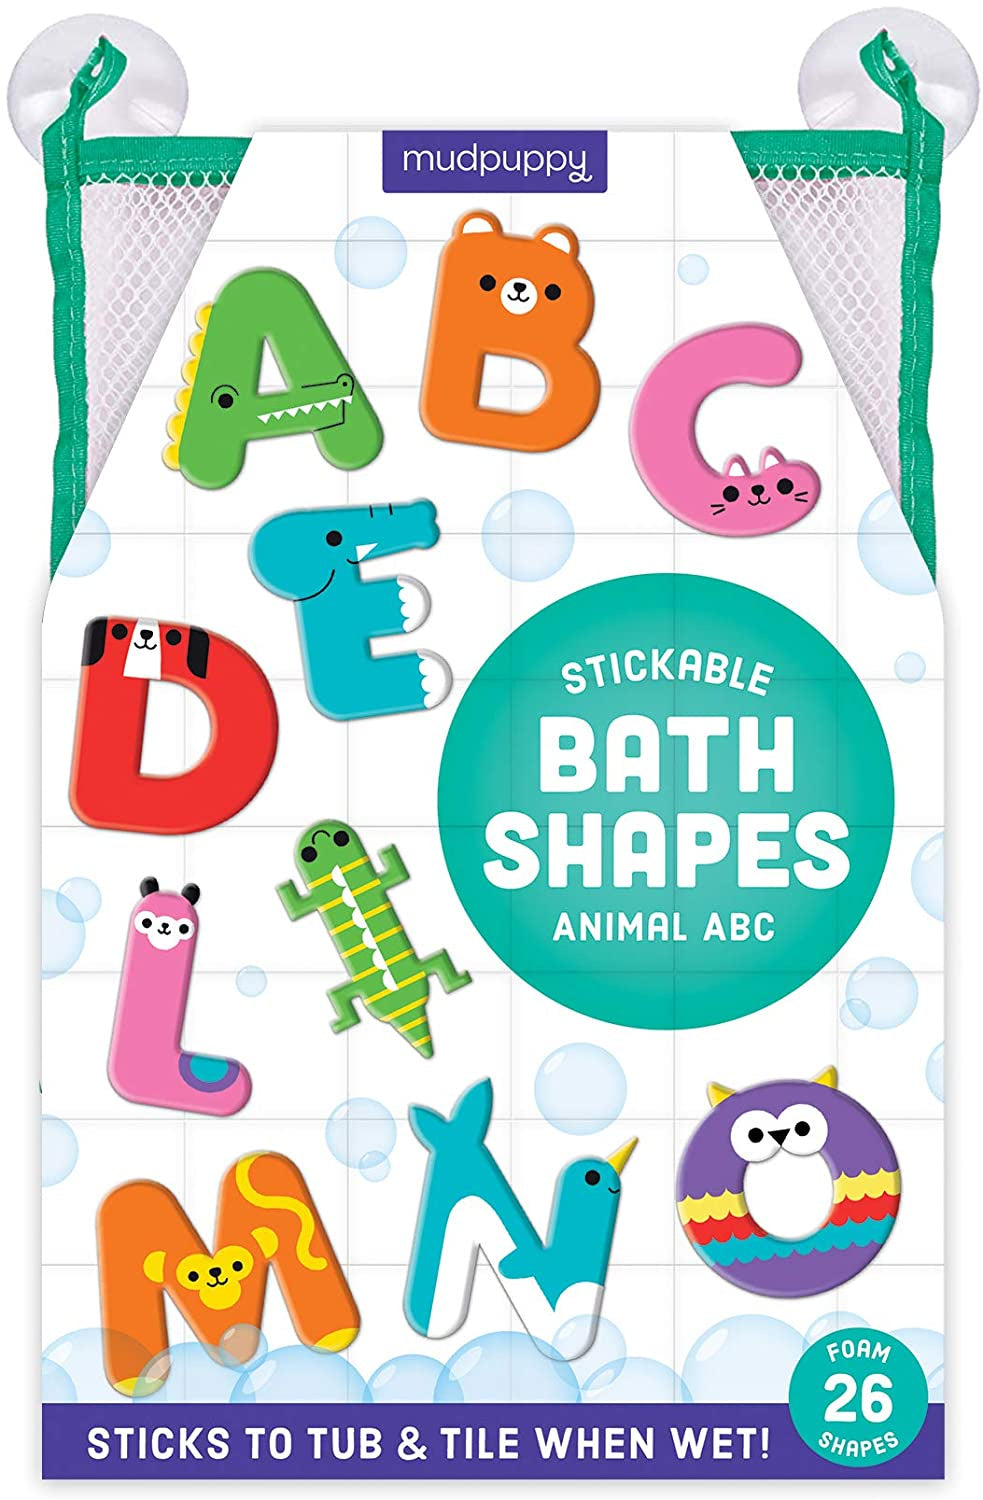 Chronicle animal abc bath shapes